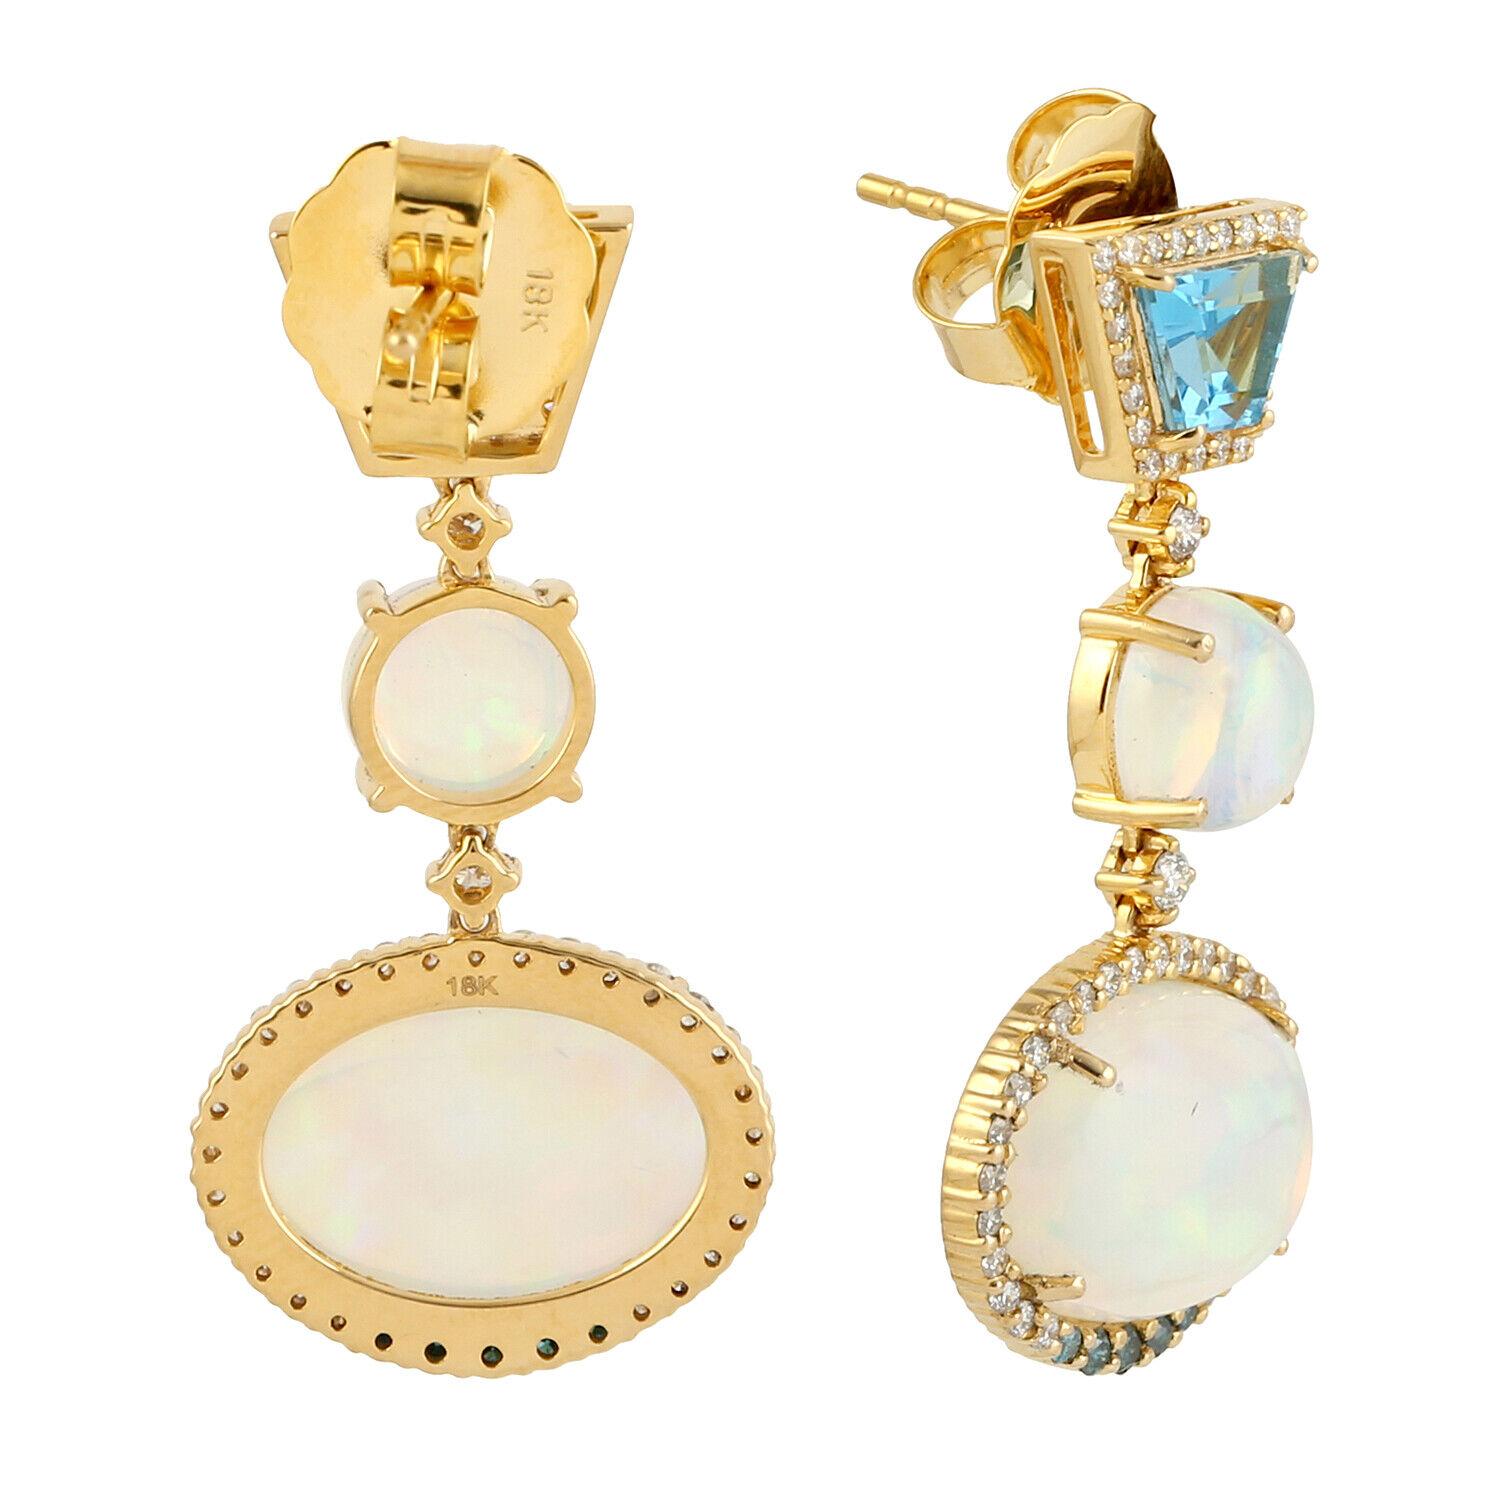 Mixed Cut Meghna Jewels 9.51 Carat Opal Topaz Diamond 14 Karat Gold Earrings For Sale